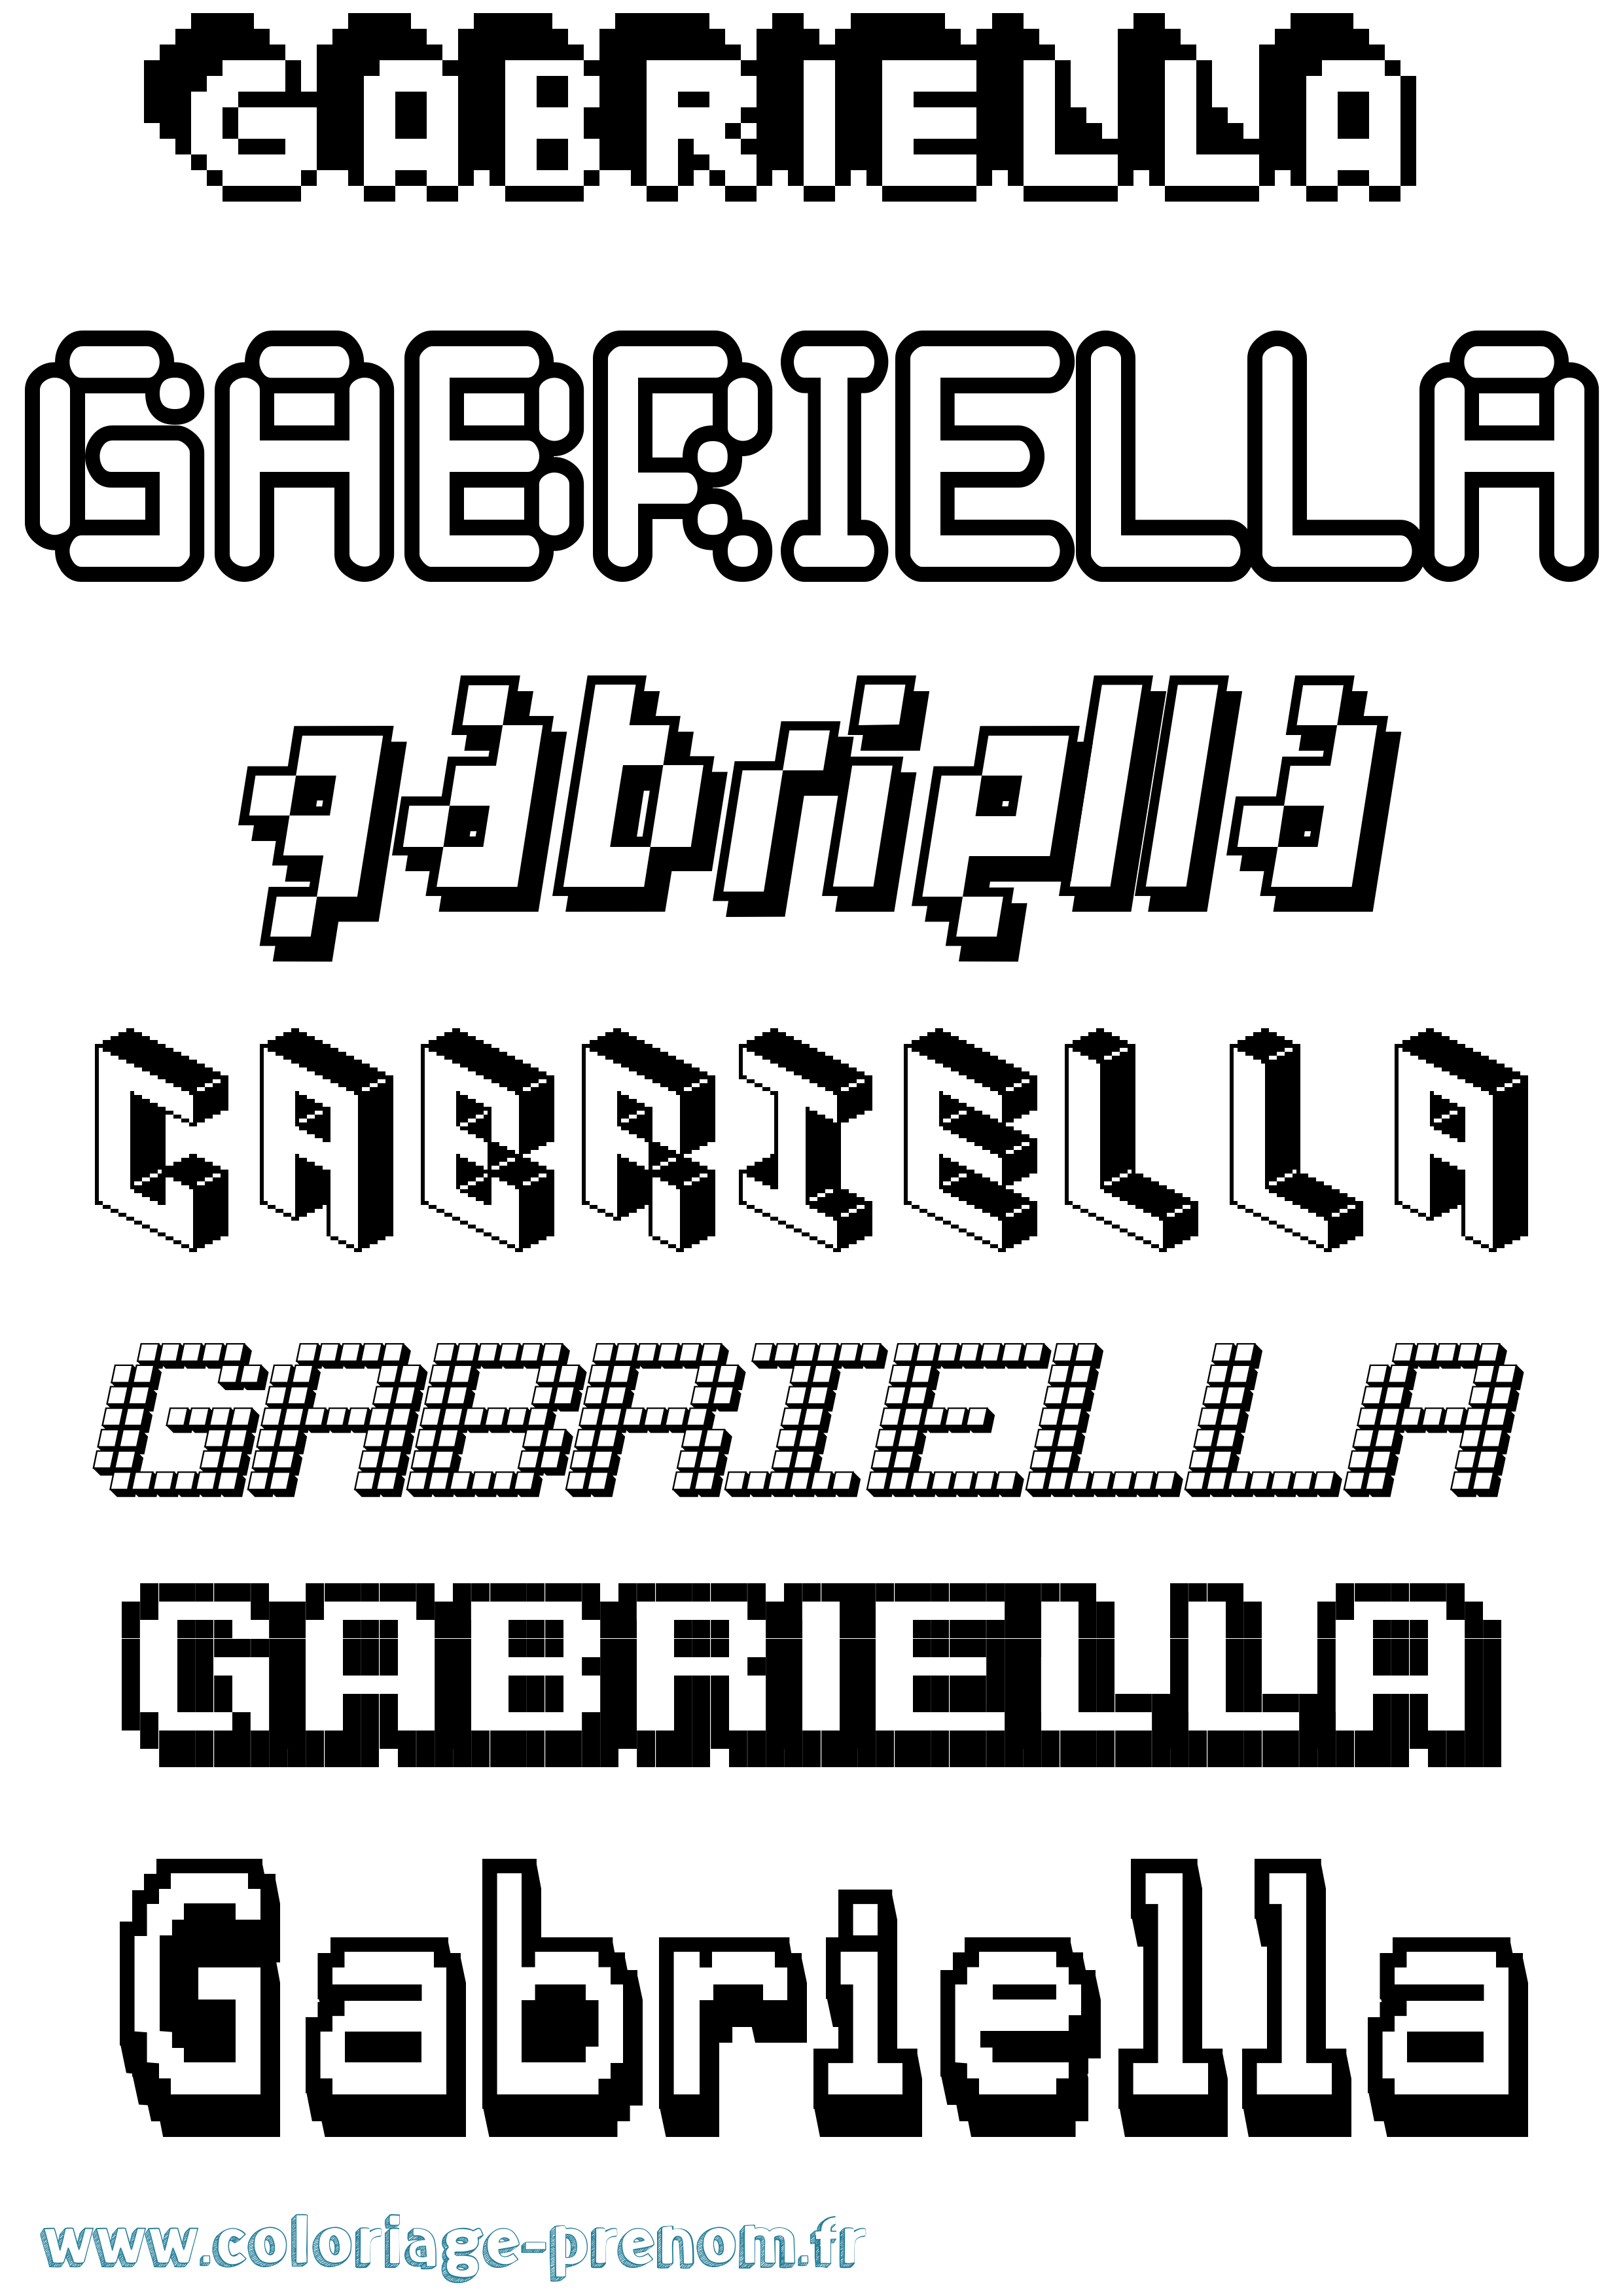 Coloriage prénom Gabriella